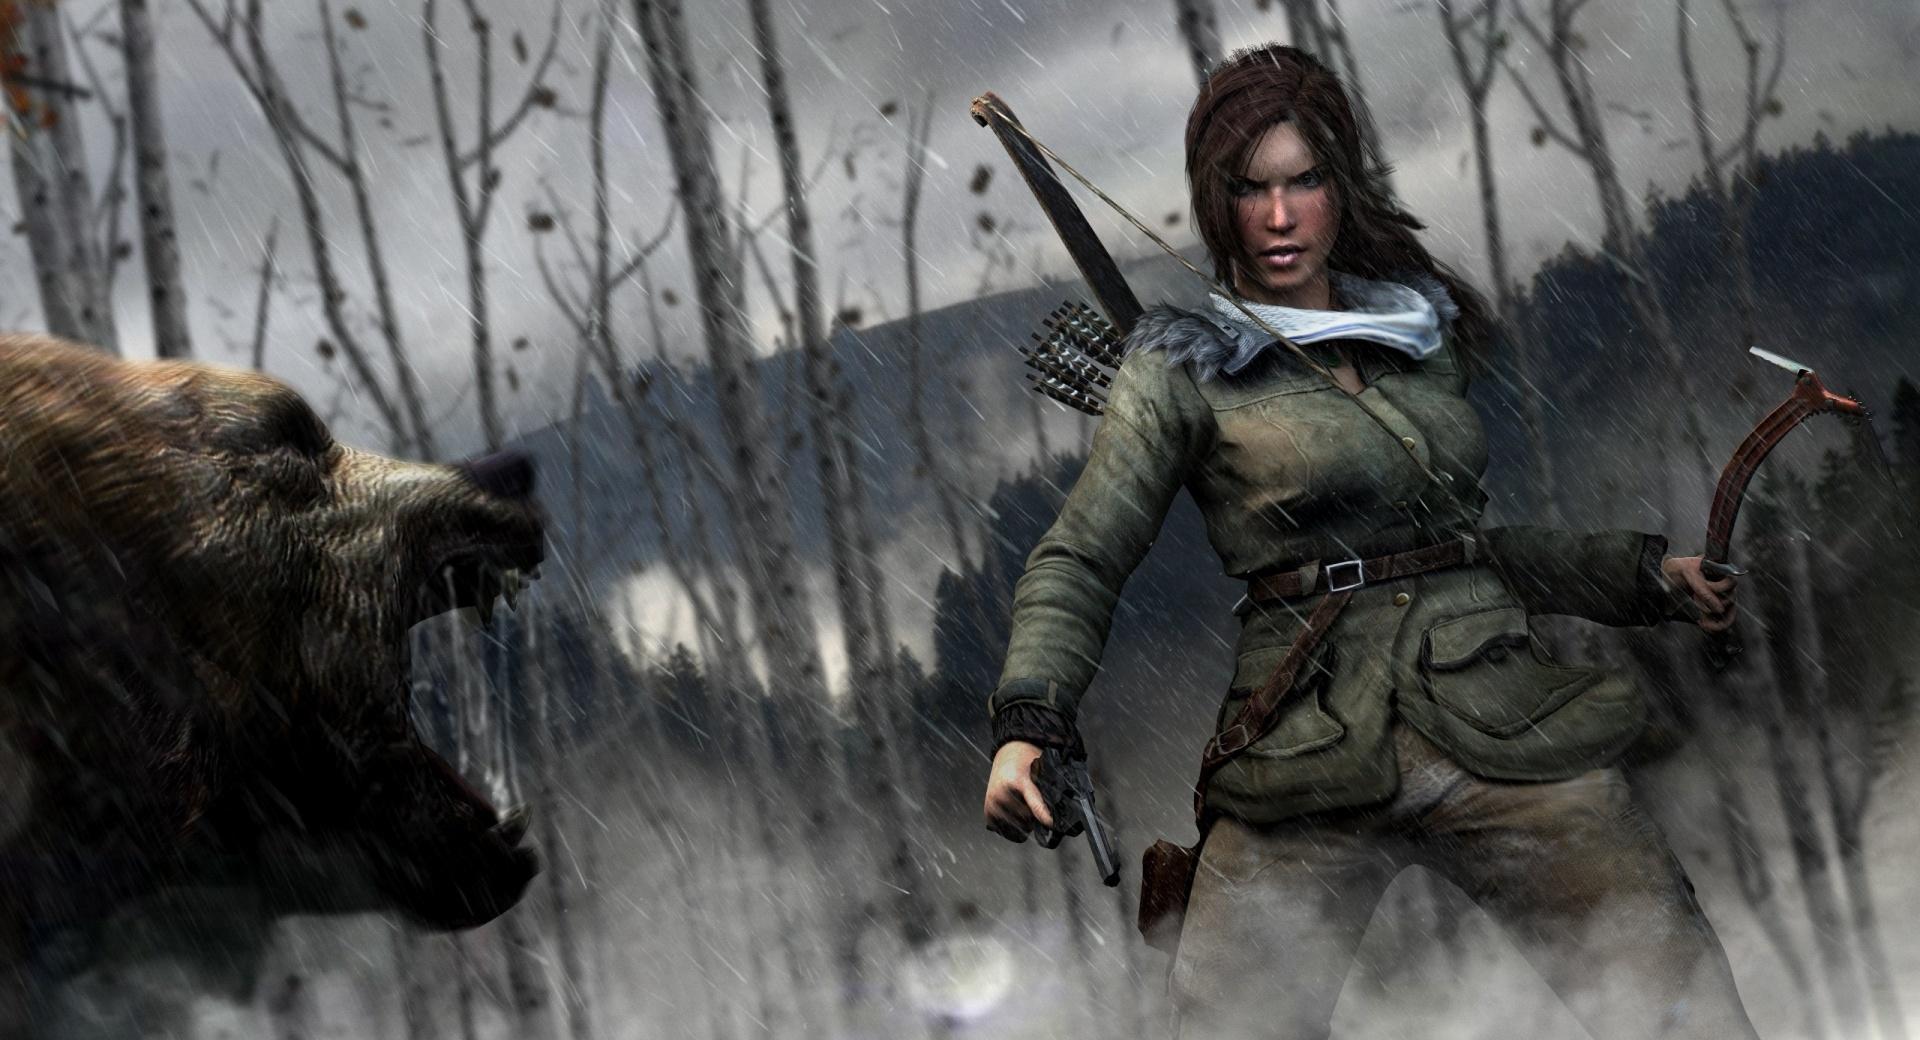 Rise of the Tomb Raider Lara Croft vs Bear at 1280 x 960 size wallpapers HD quality